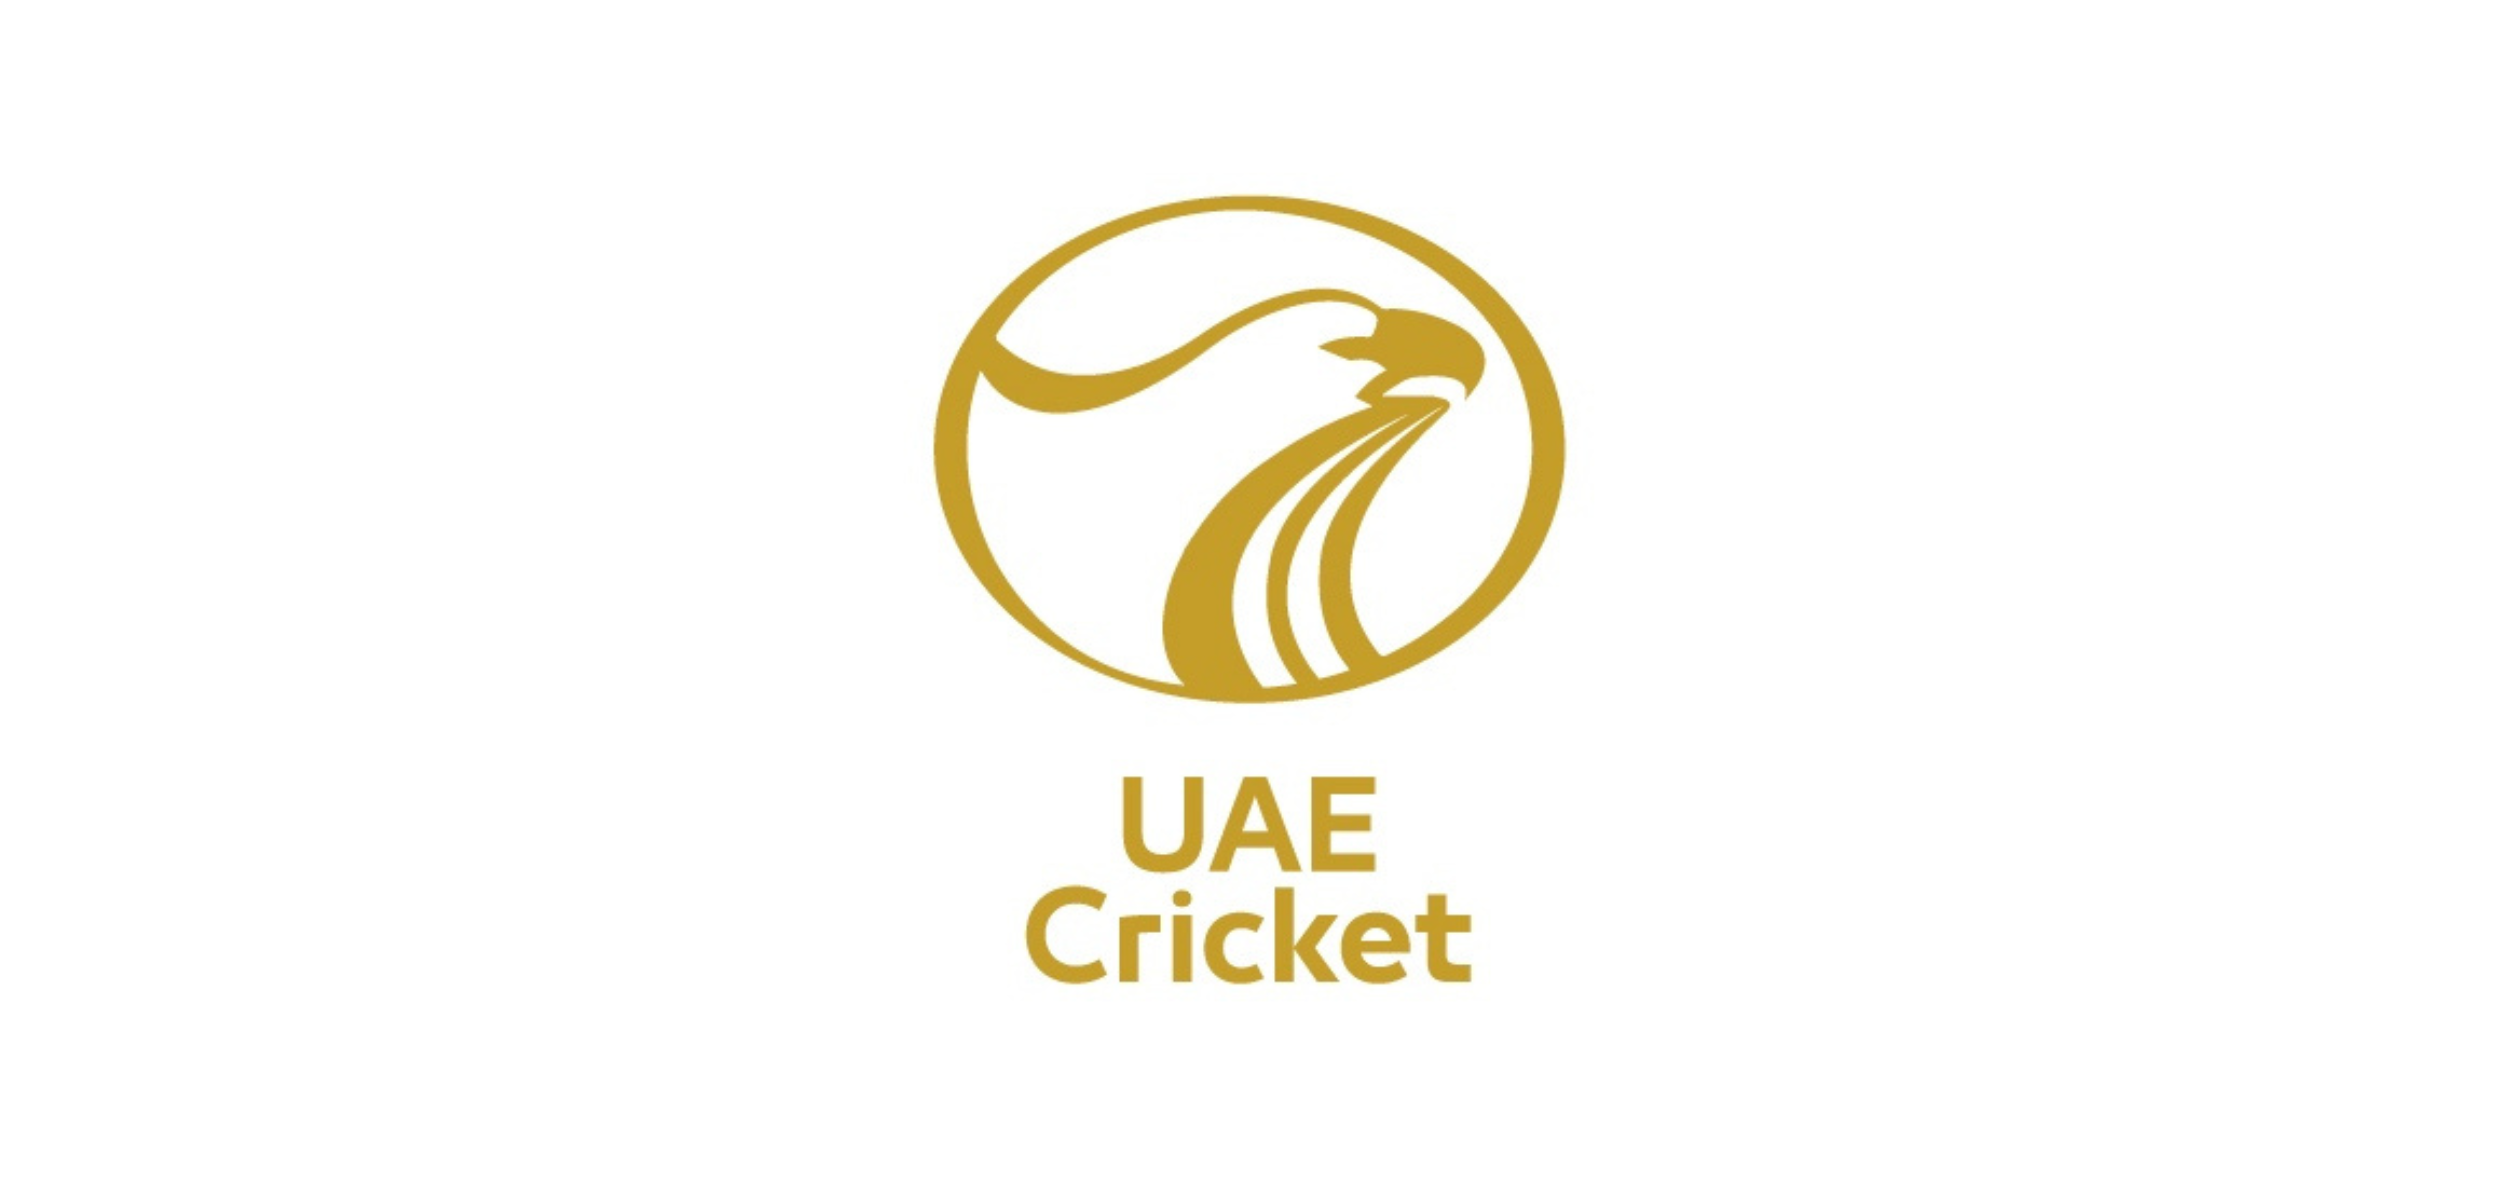 Portal/app management resource for Emirates Cricket Board